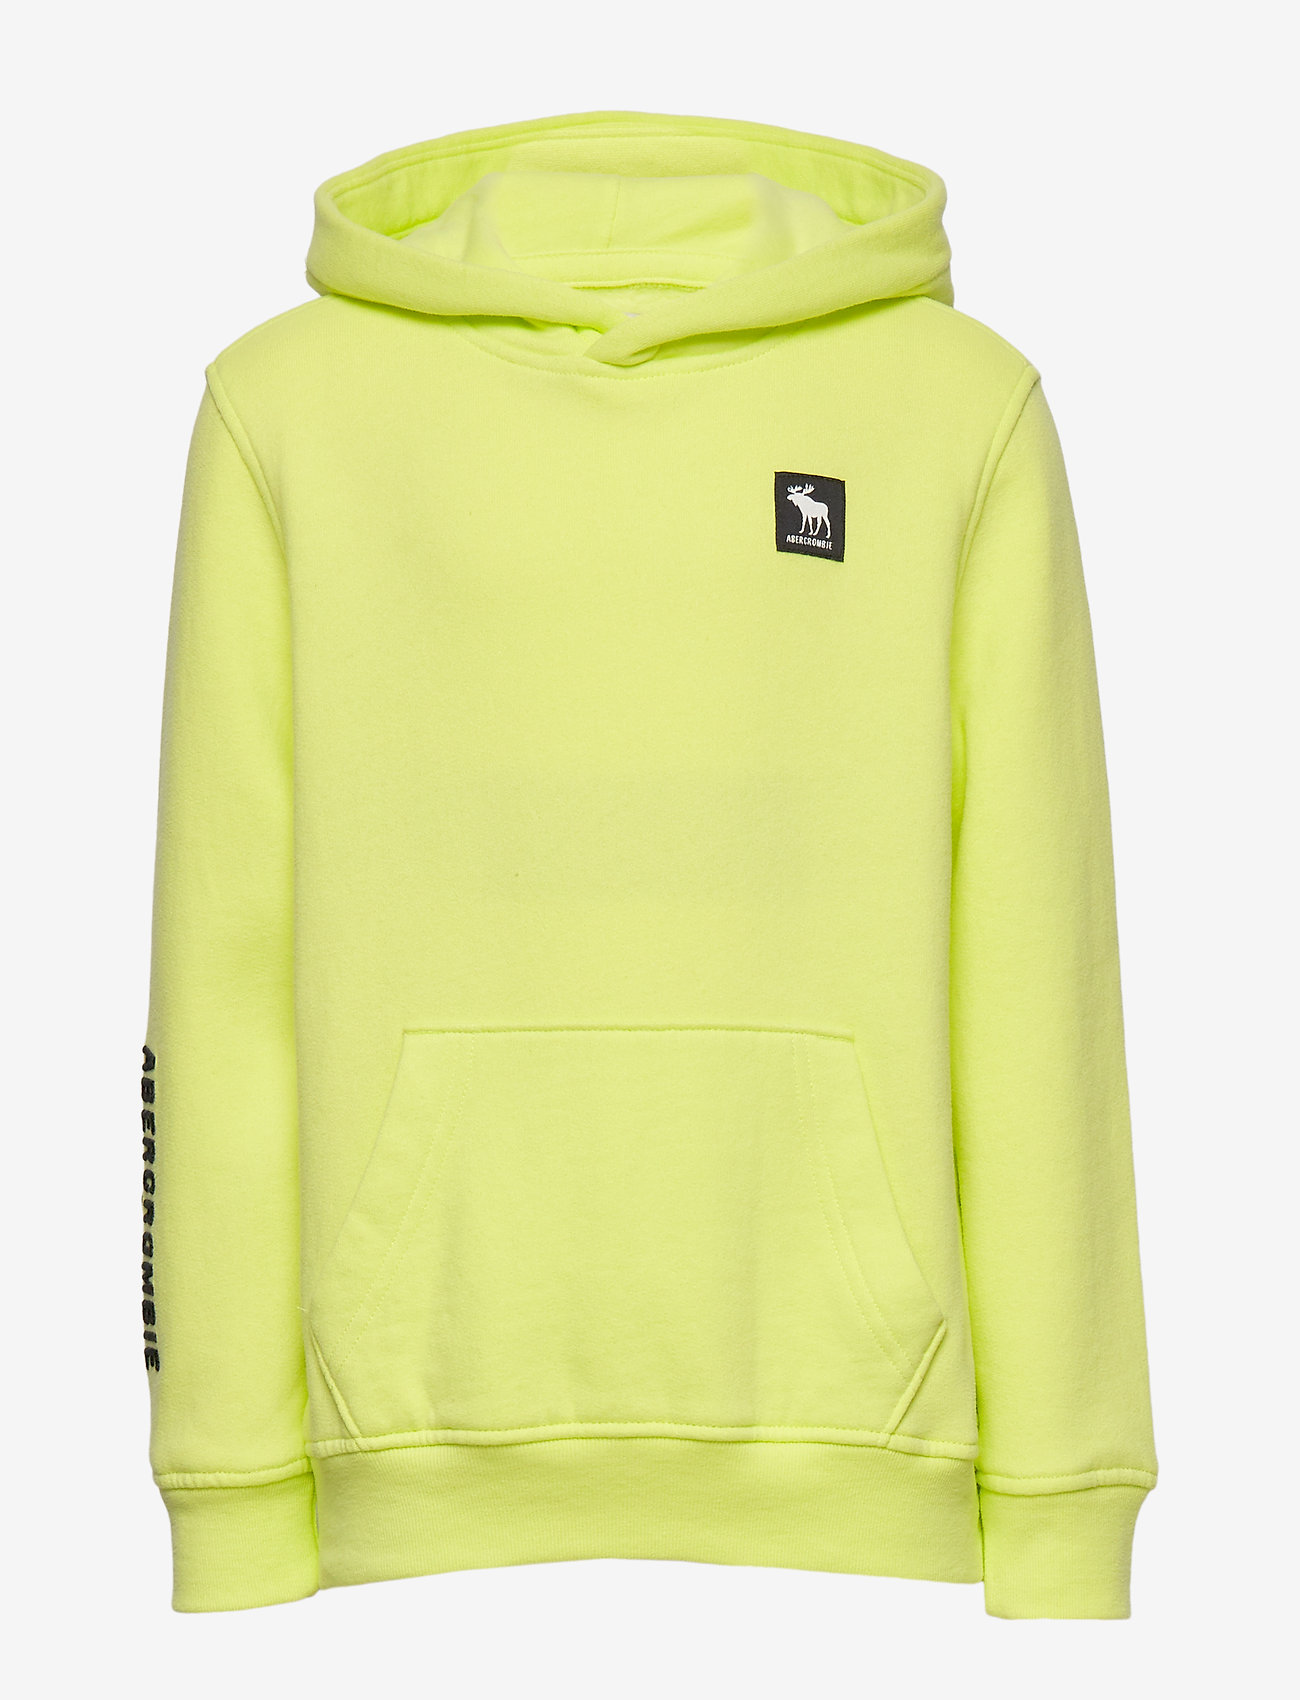 abercrombie yellow hoodie